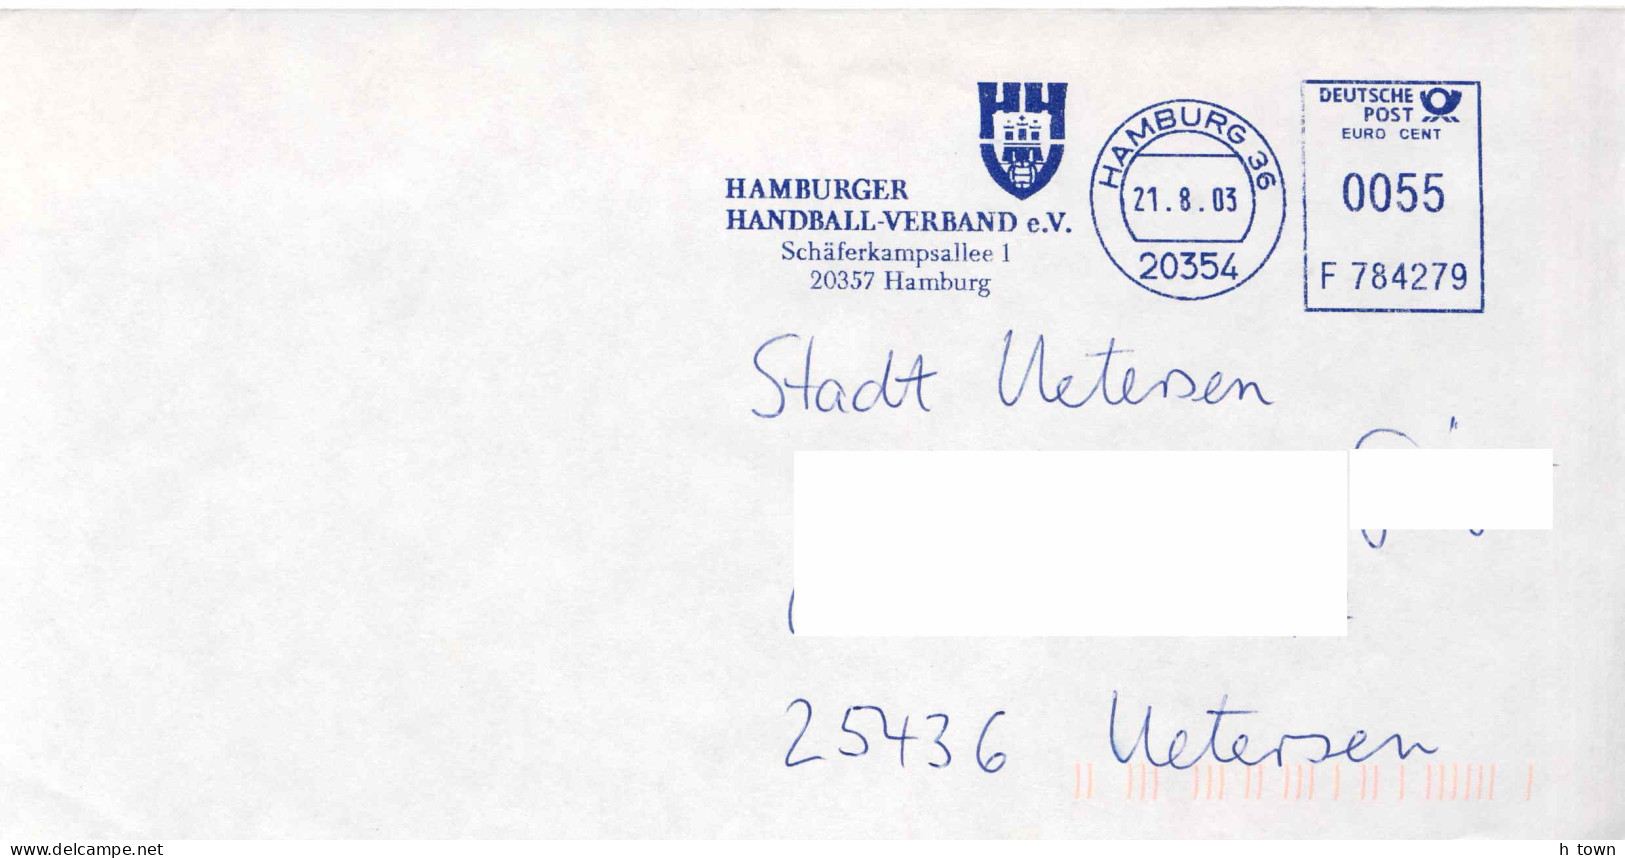 126  Hand-Ball: Ema D'Allemagne, 2003 - Handball Meter Stamp From Hamburg, Germany - Handball